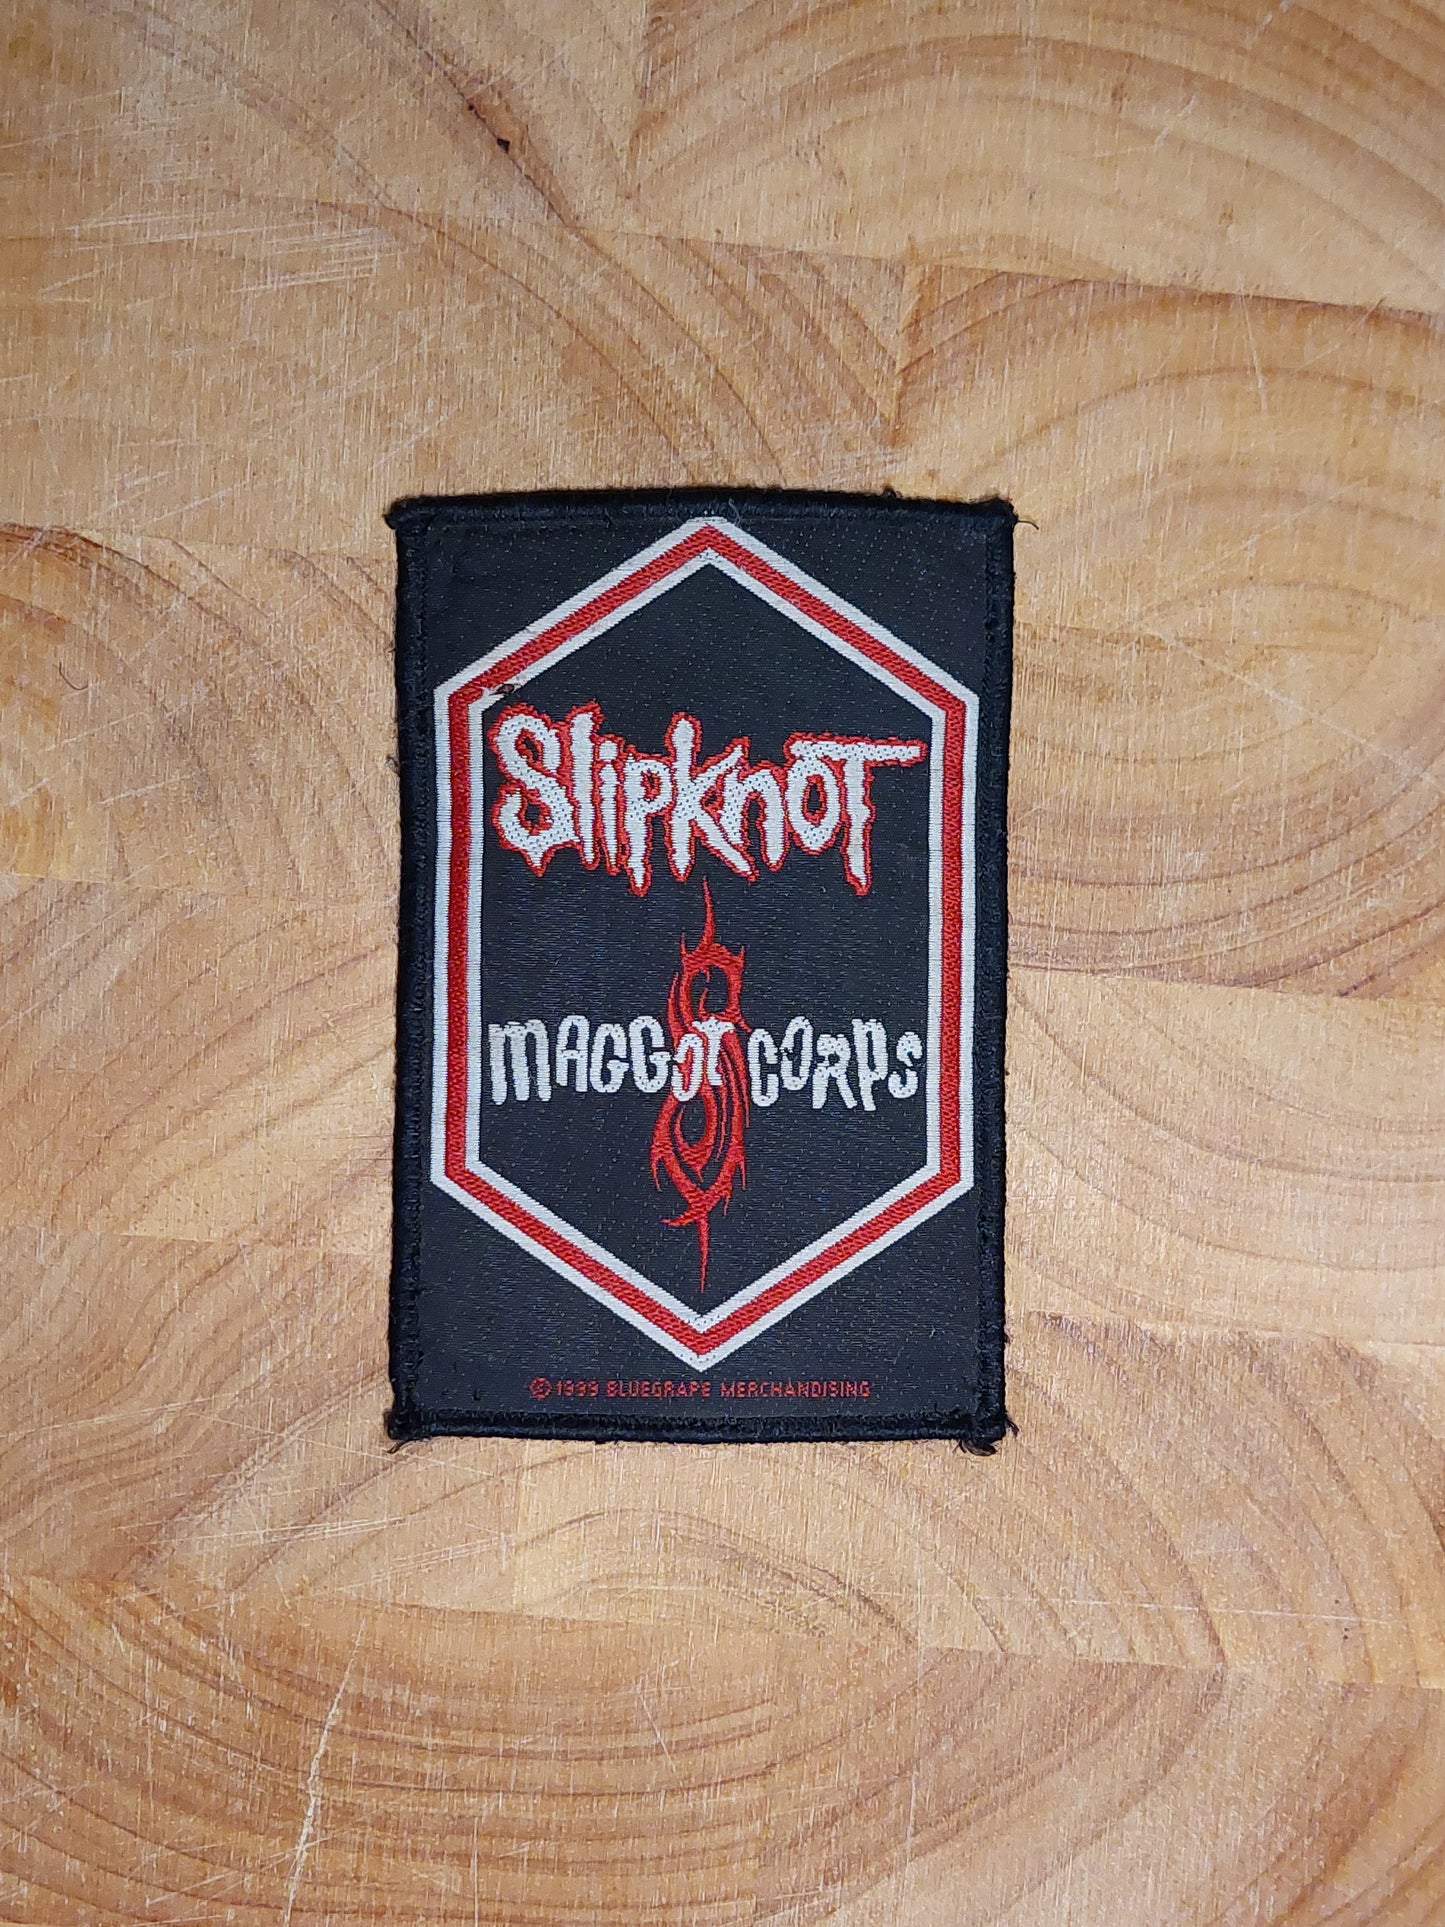 Vintage slipknot patches